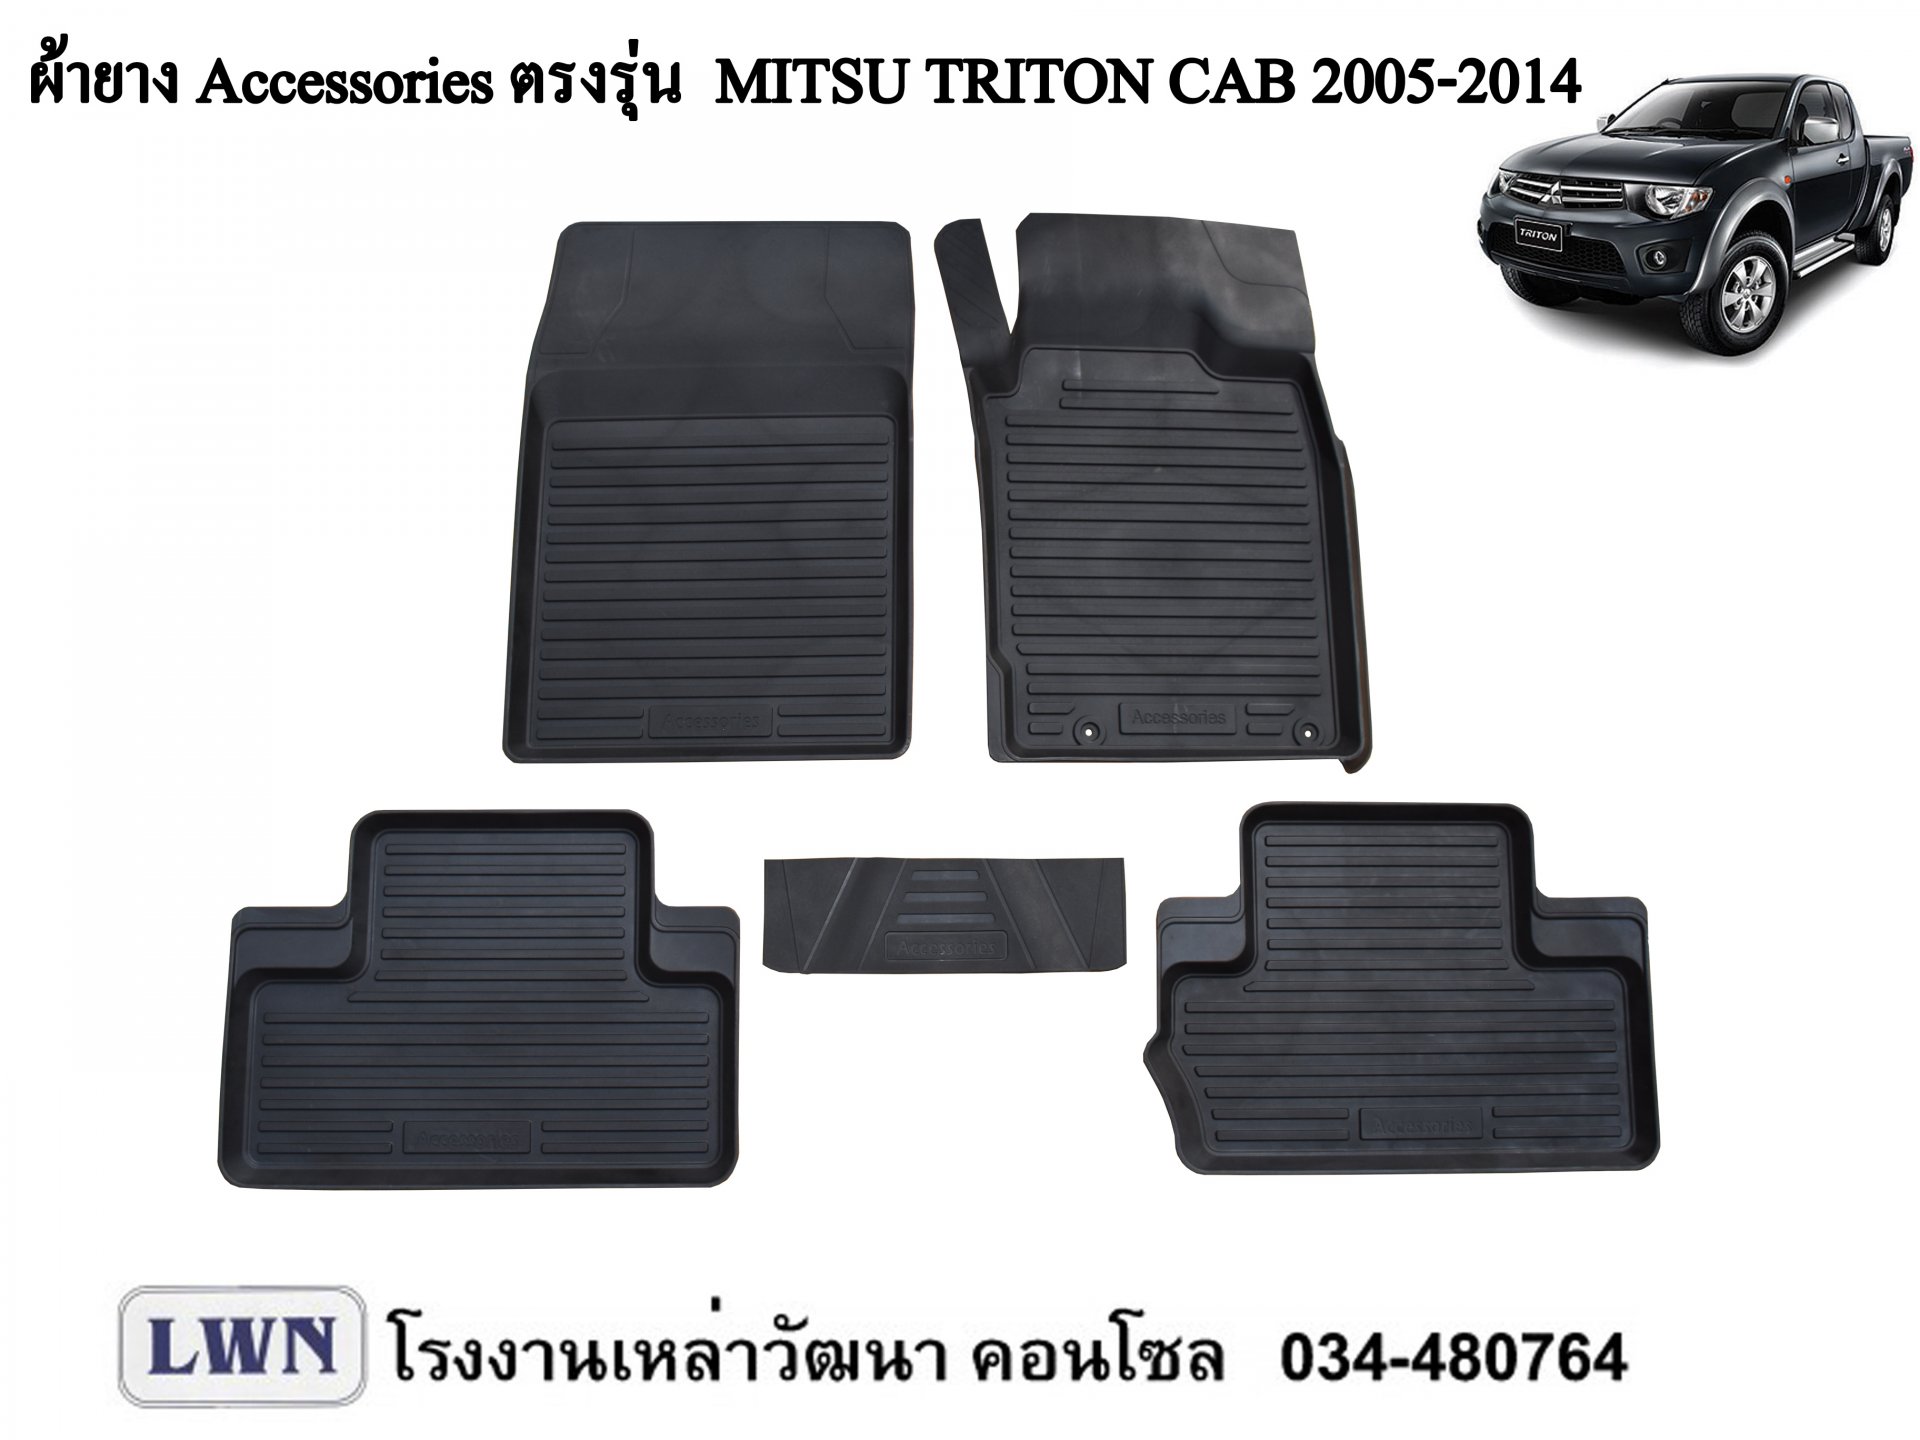 ACC-Mitsu Trition Single Cab